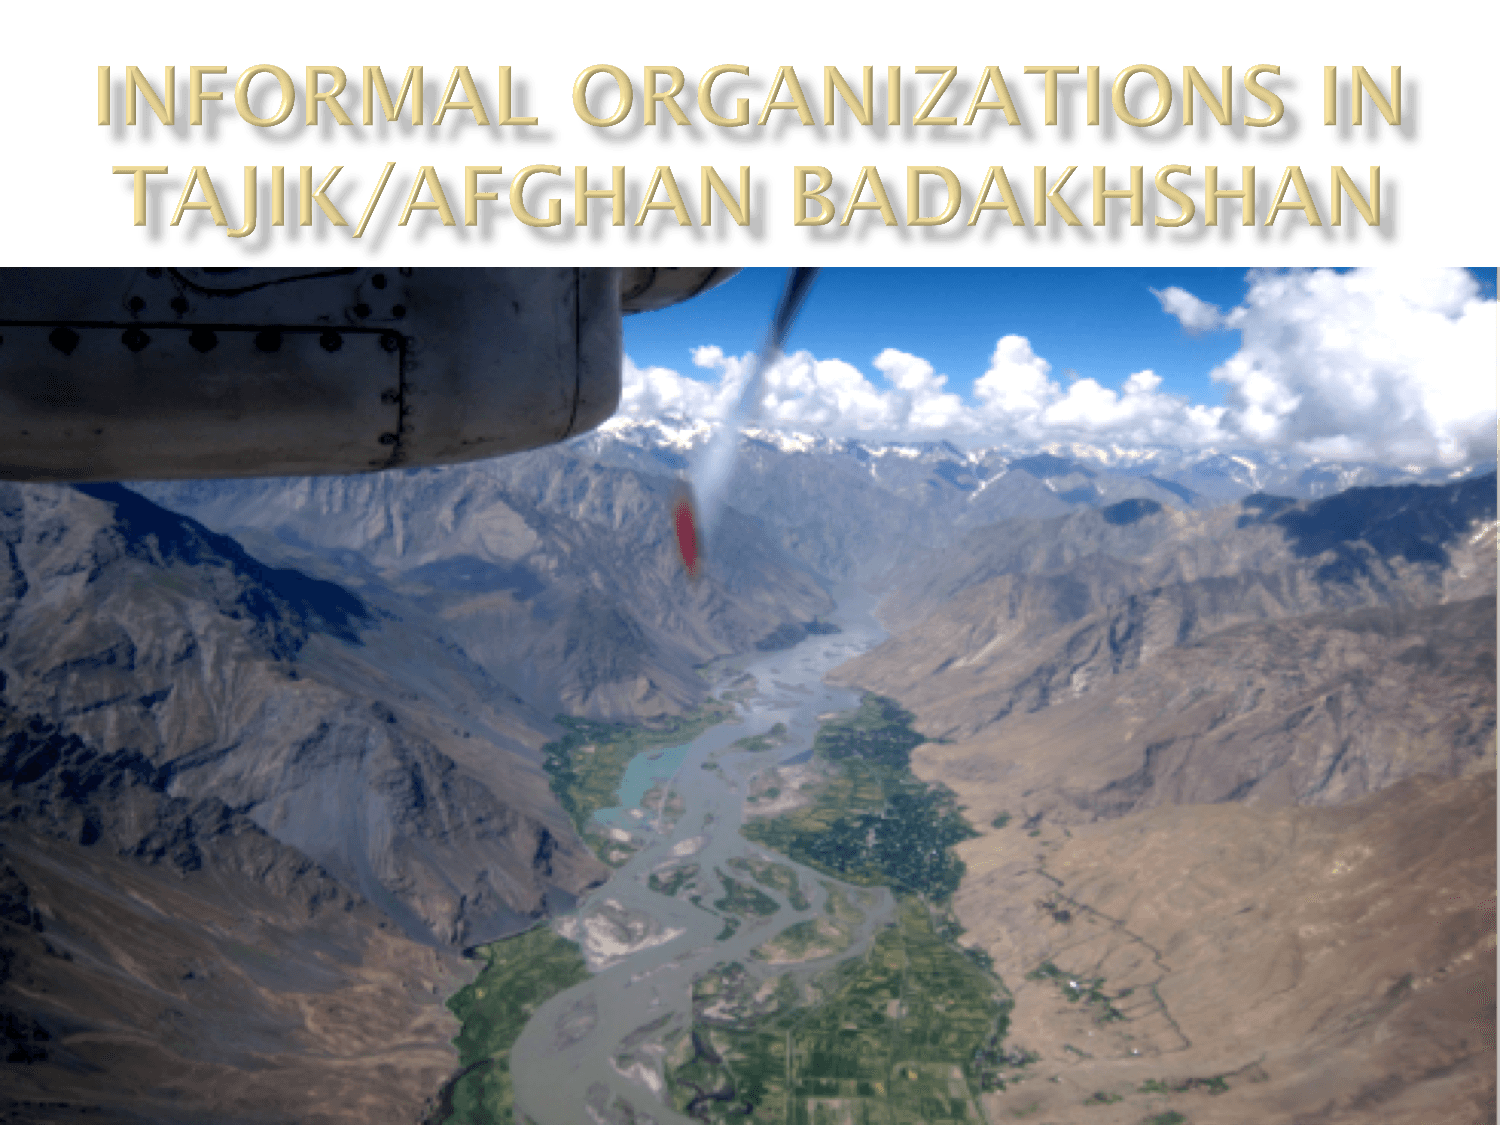 flyer for Informal Organizations in Tajik/Afghan Badakhshan